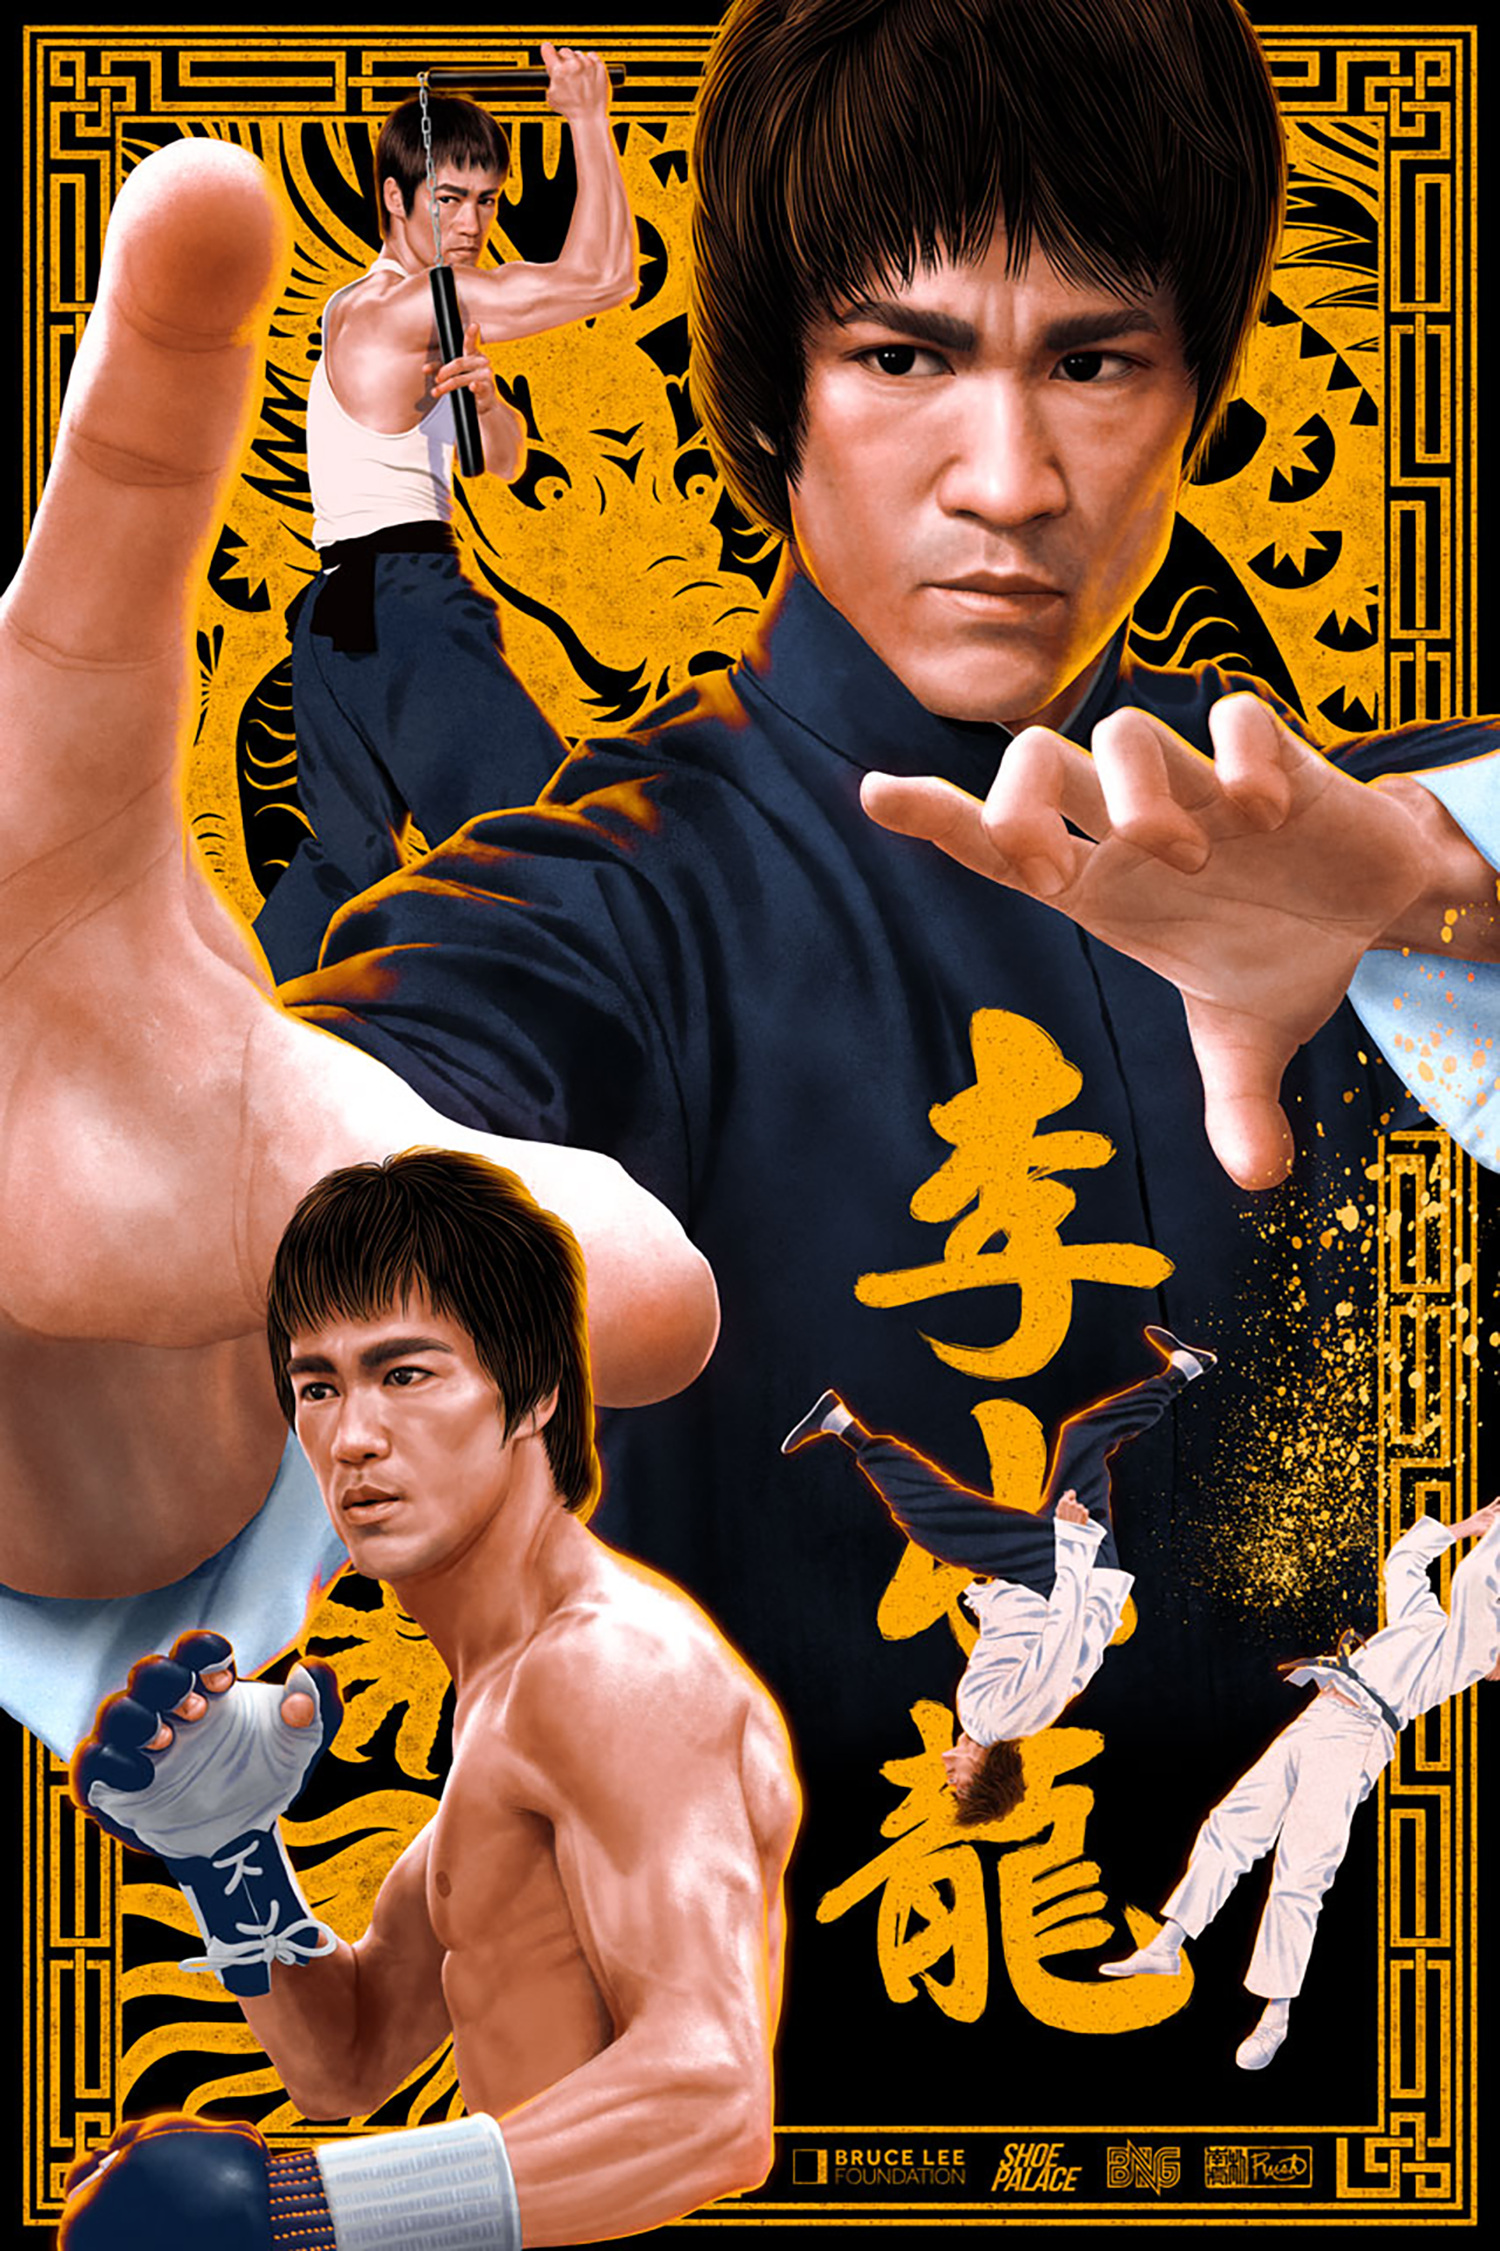 Bruce Lee JKD Glove – Century Martial Arts